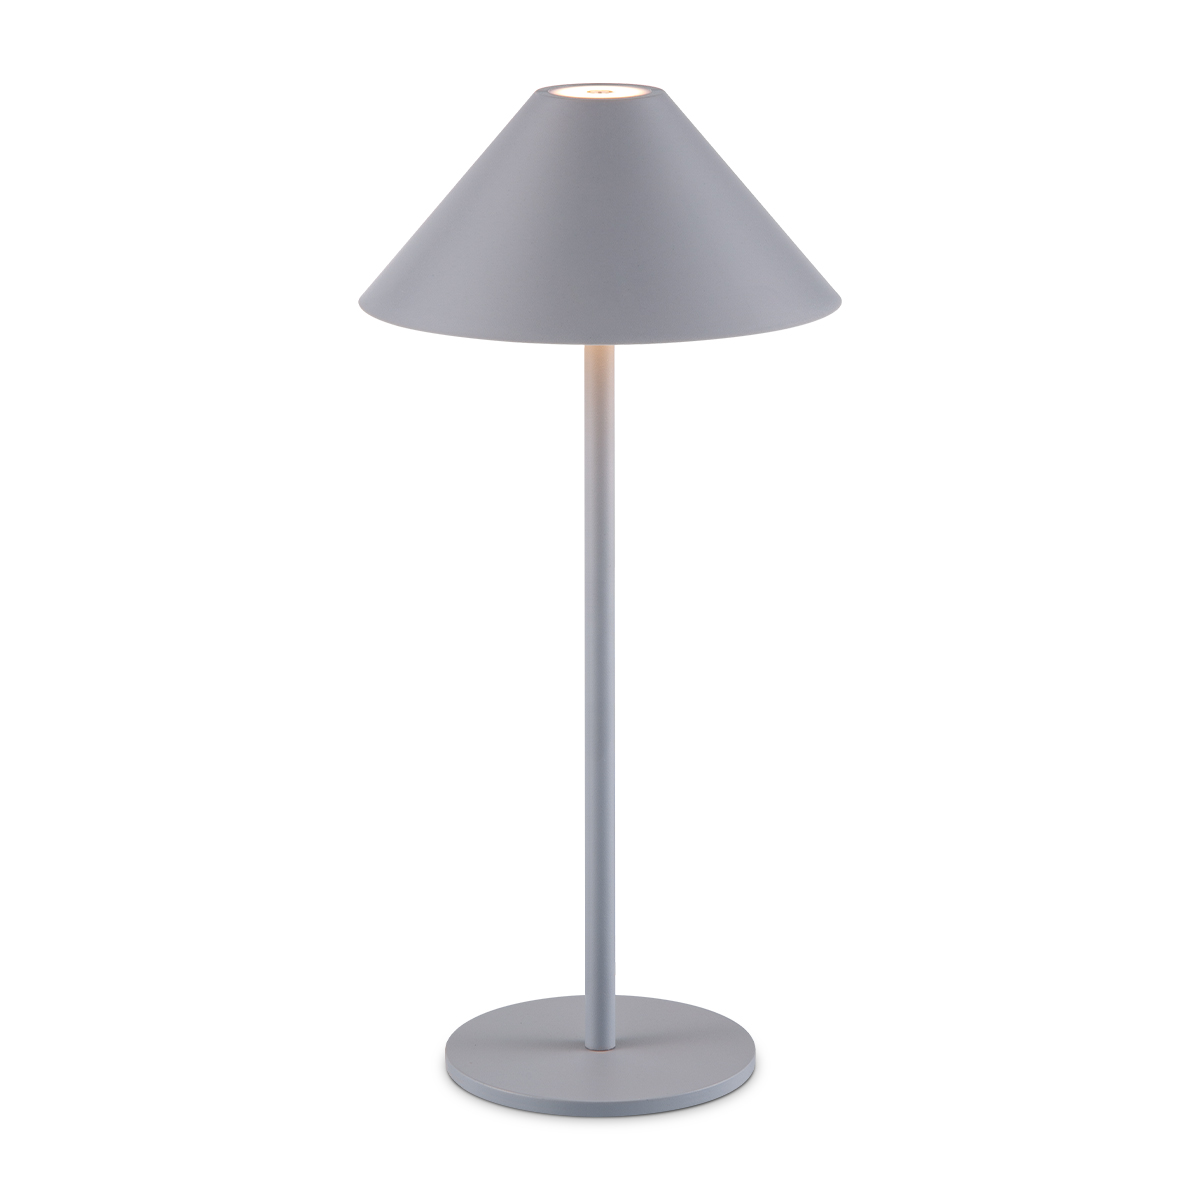 Tangla lighting - TLT7643-01GY - LED table lamp - rechargeable plastic and metal - grey - umbrella